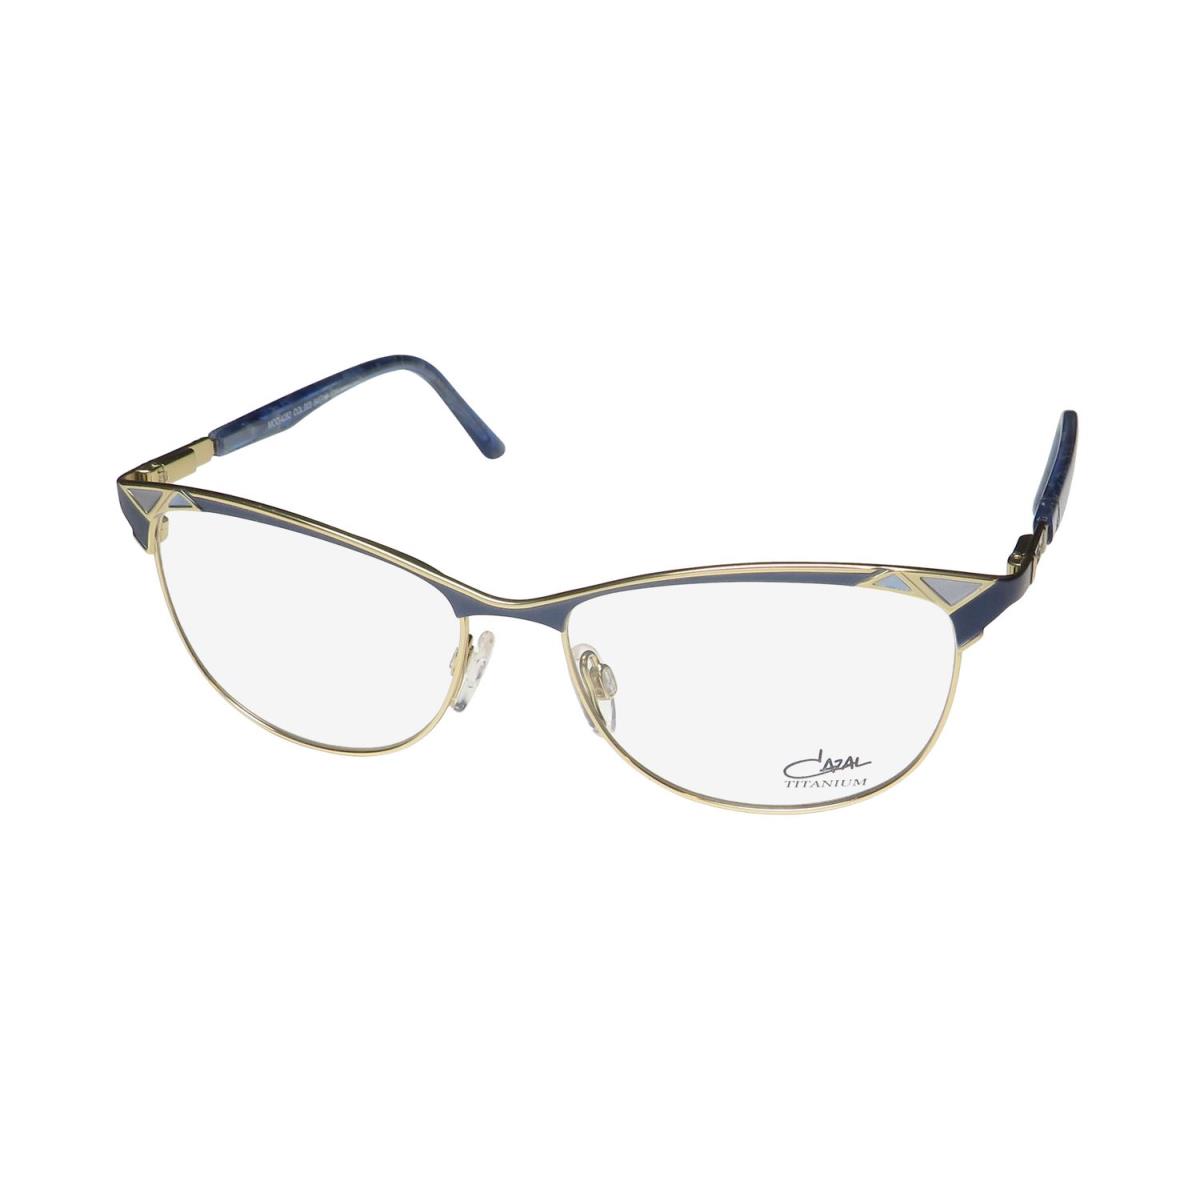 Cazal 4282 Titanium Metal Made IN Germany Modern Eyeglass Frame/glasses Blue / Gold